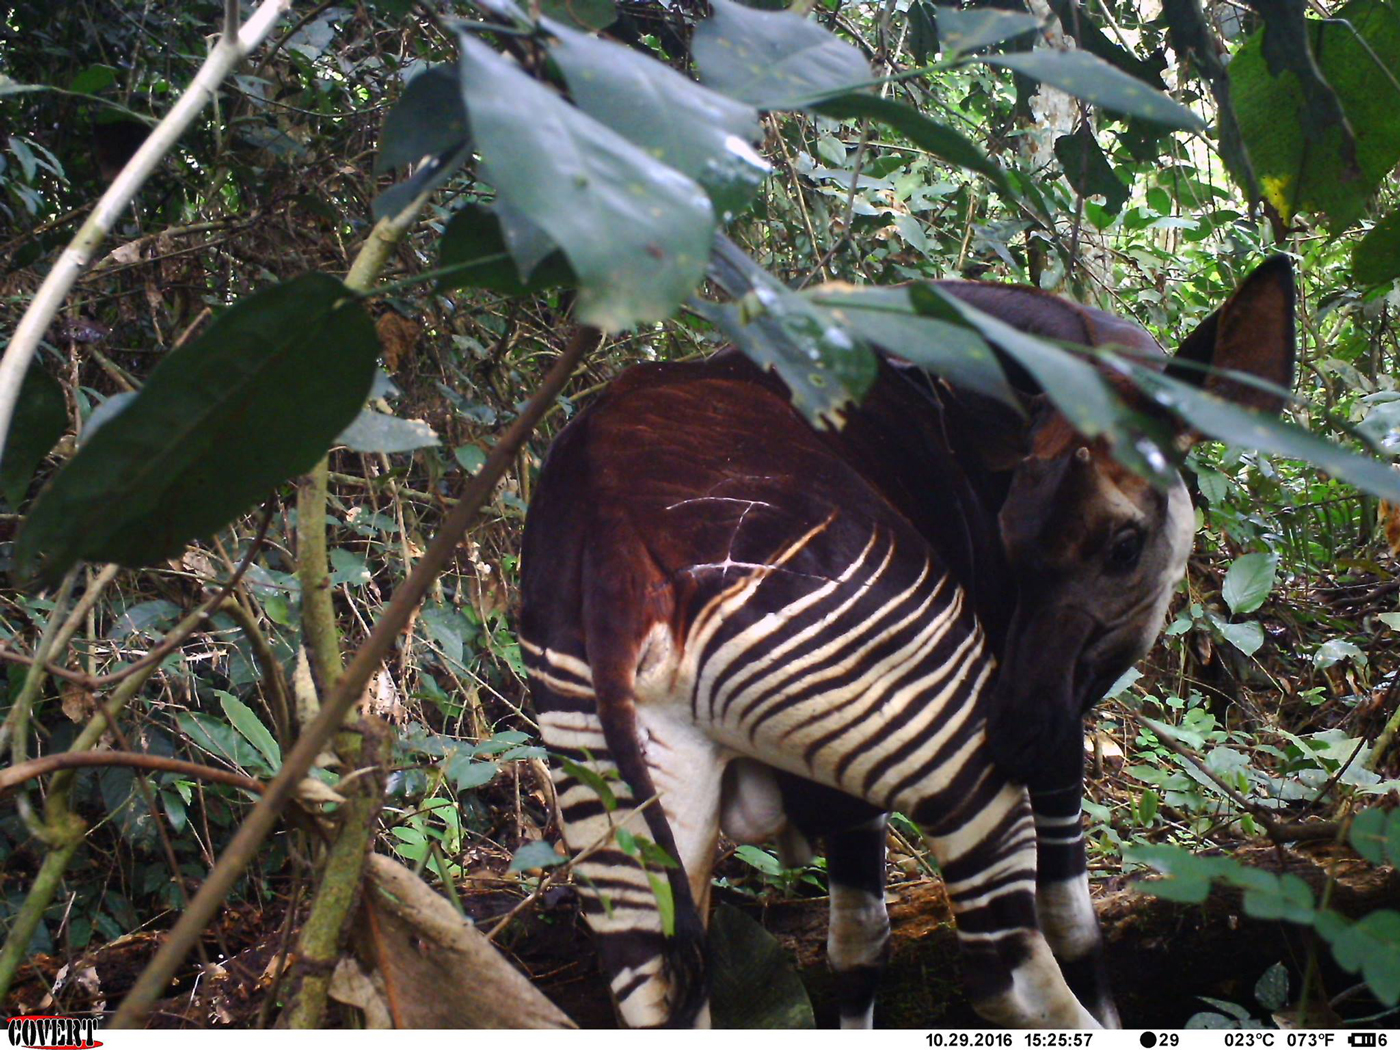 Camera trap photo of an okapi with presumed leopard scar